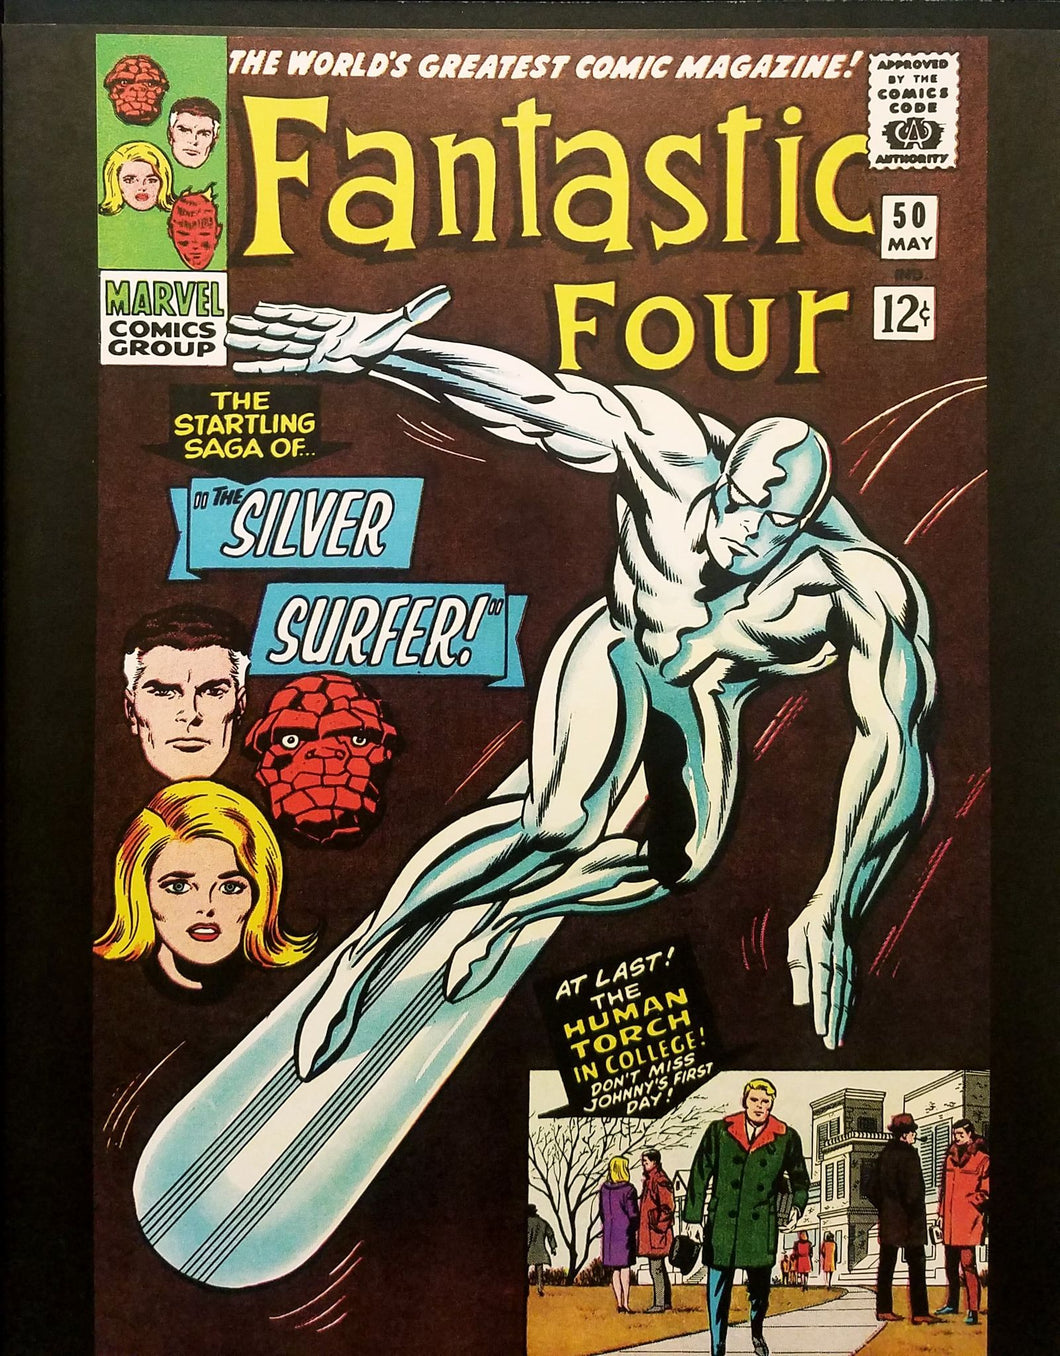 Fantastic Four #50 by Jack Kirby 11x14 FRAMED Art Print, Vintage 1966 Marvel Comics